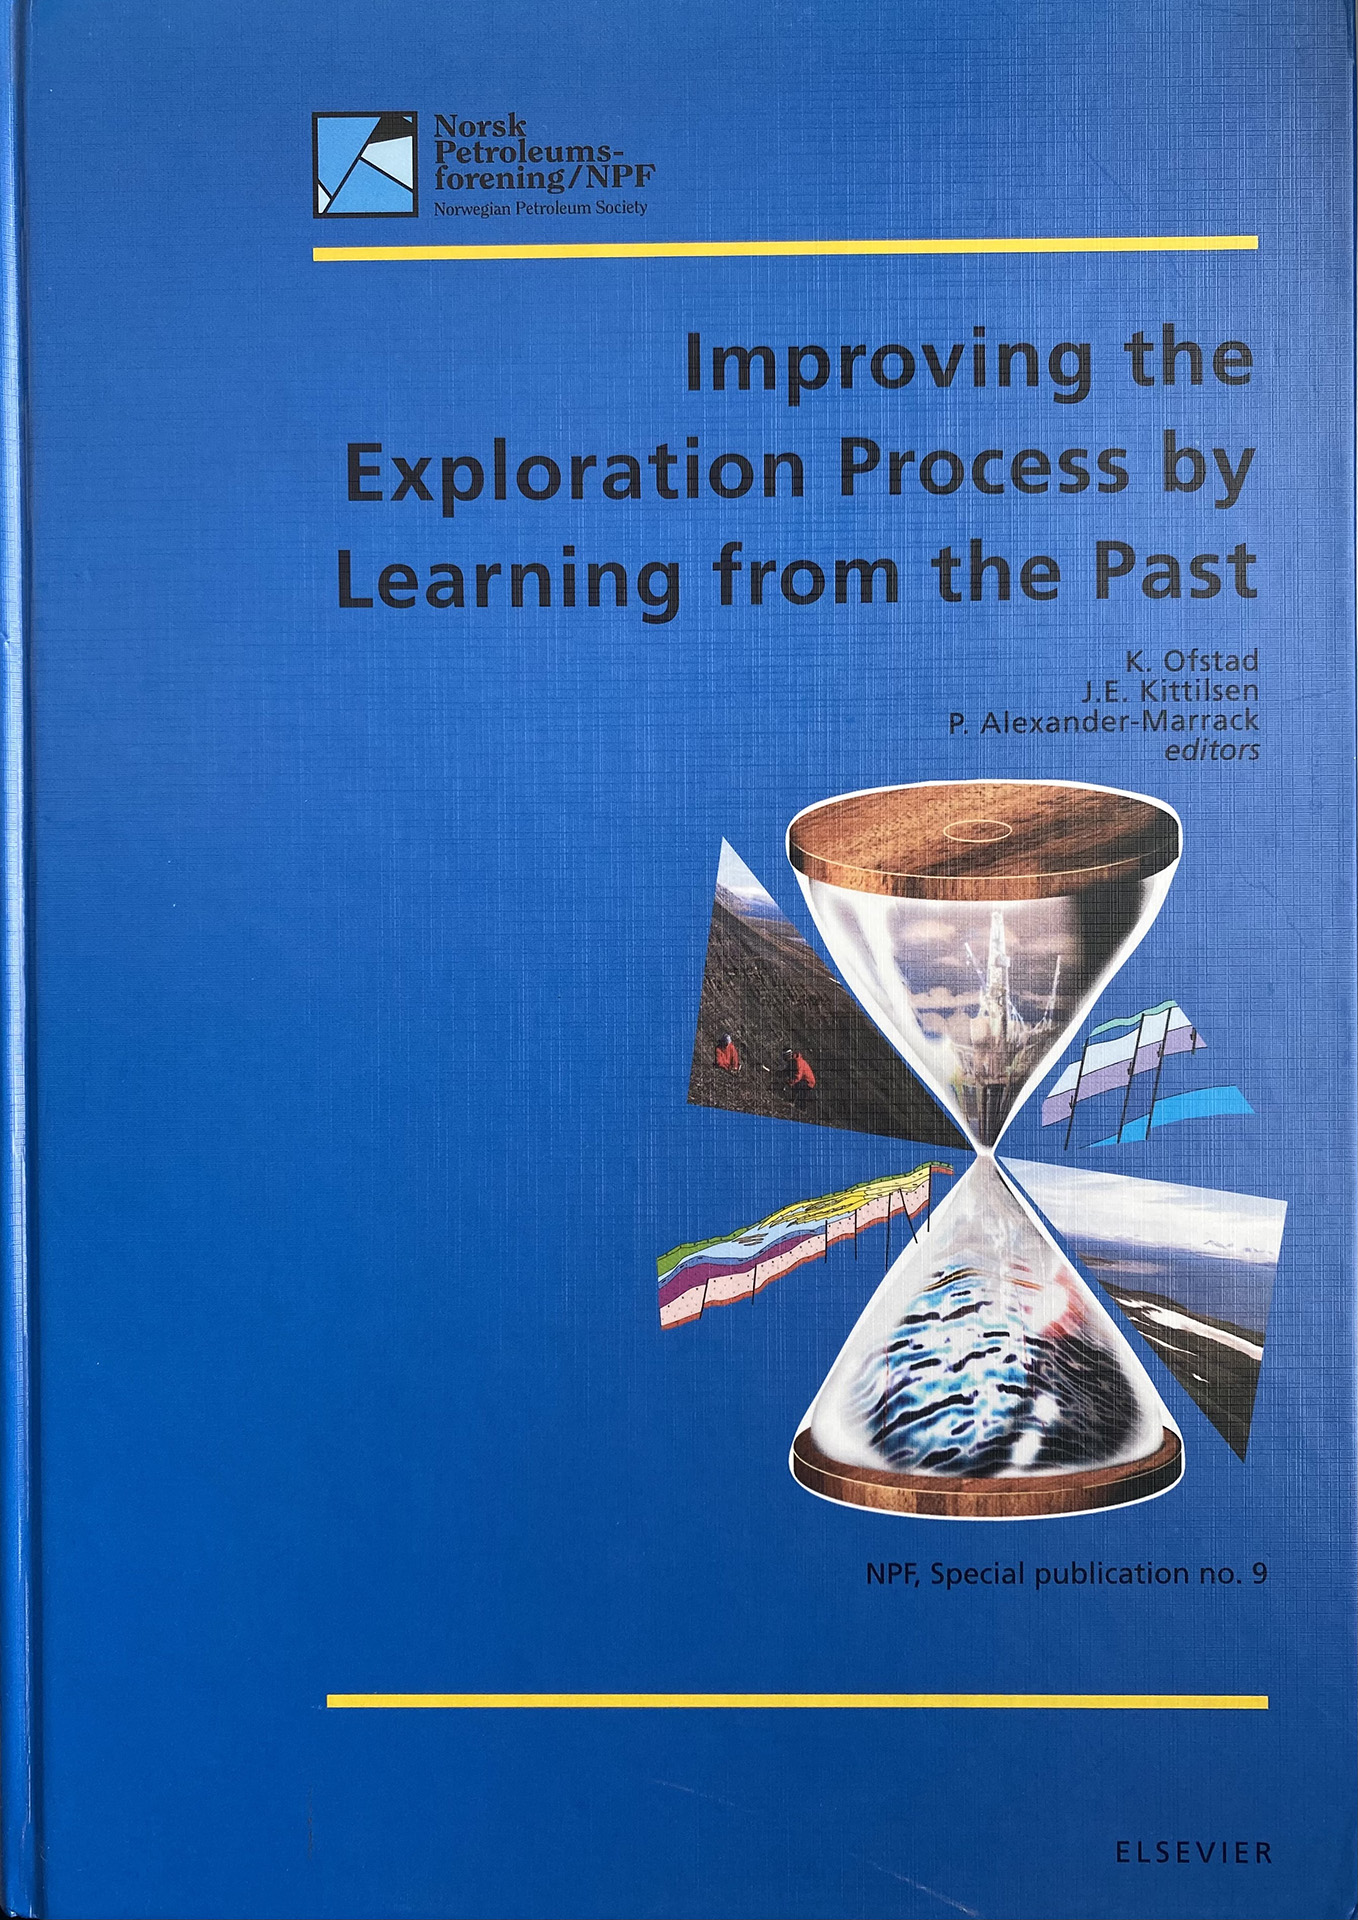 "Improving the Exploration Process by Learning from the Past" (K. Ofstad, J.E. Kittilsen & P. Alexander-Marrack (redaktører), NPF Special Publication 9, Elsevier, 2000)